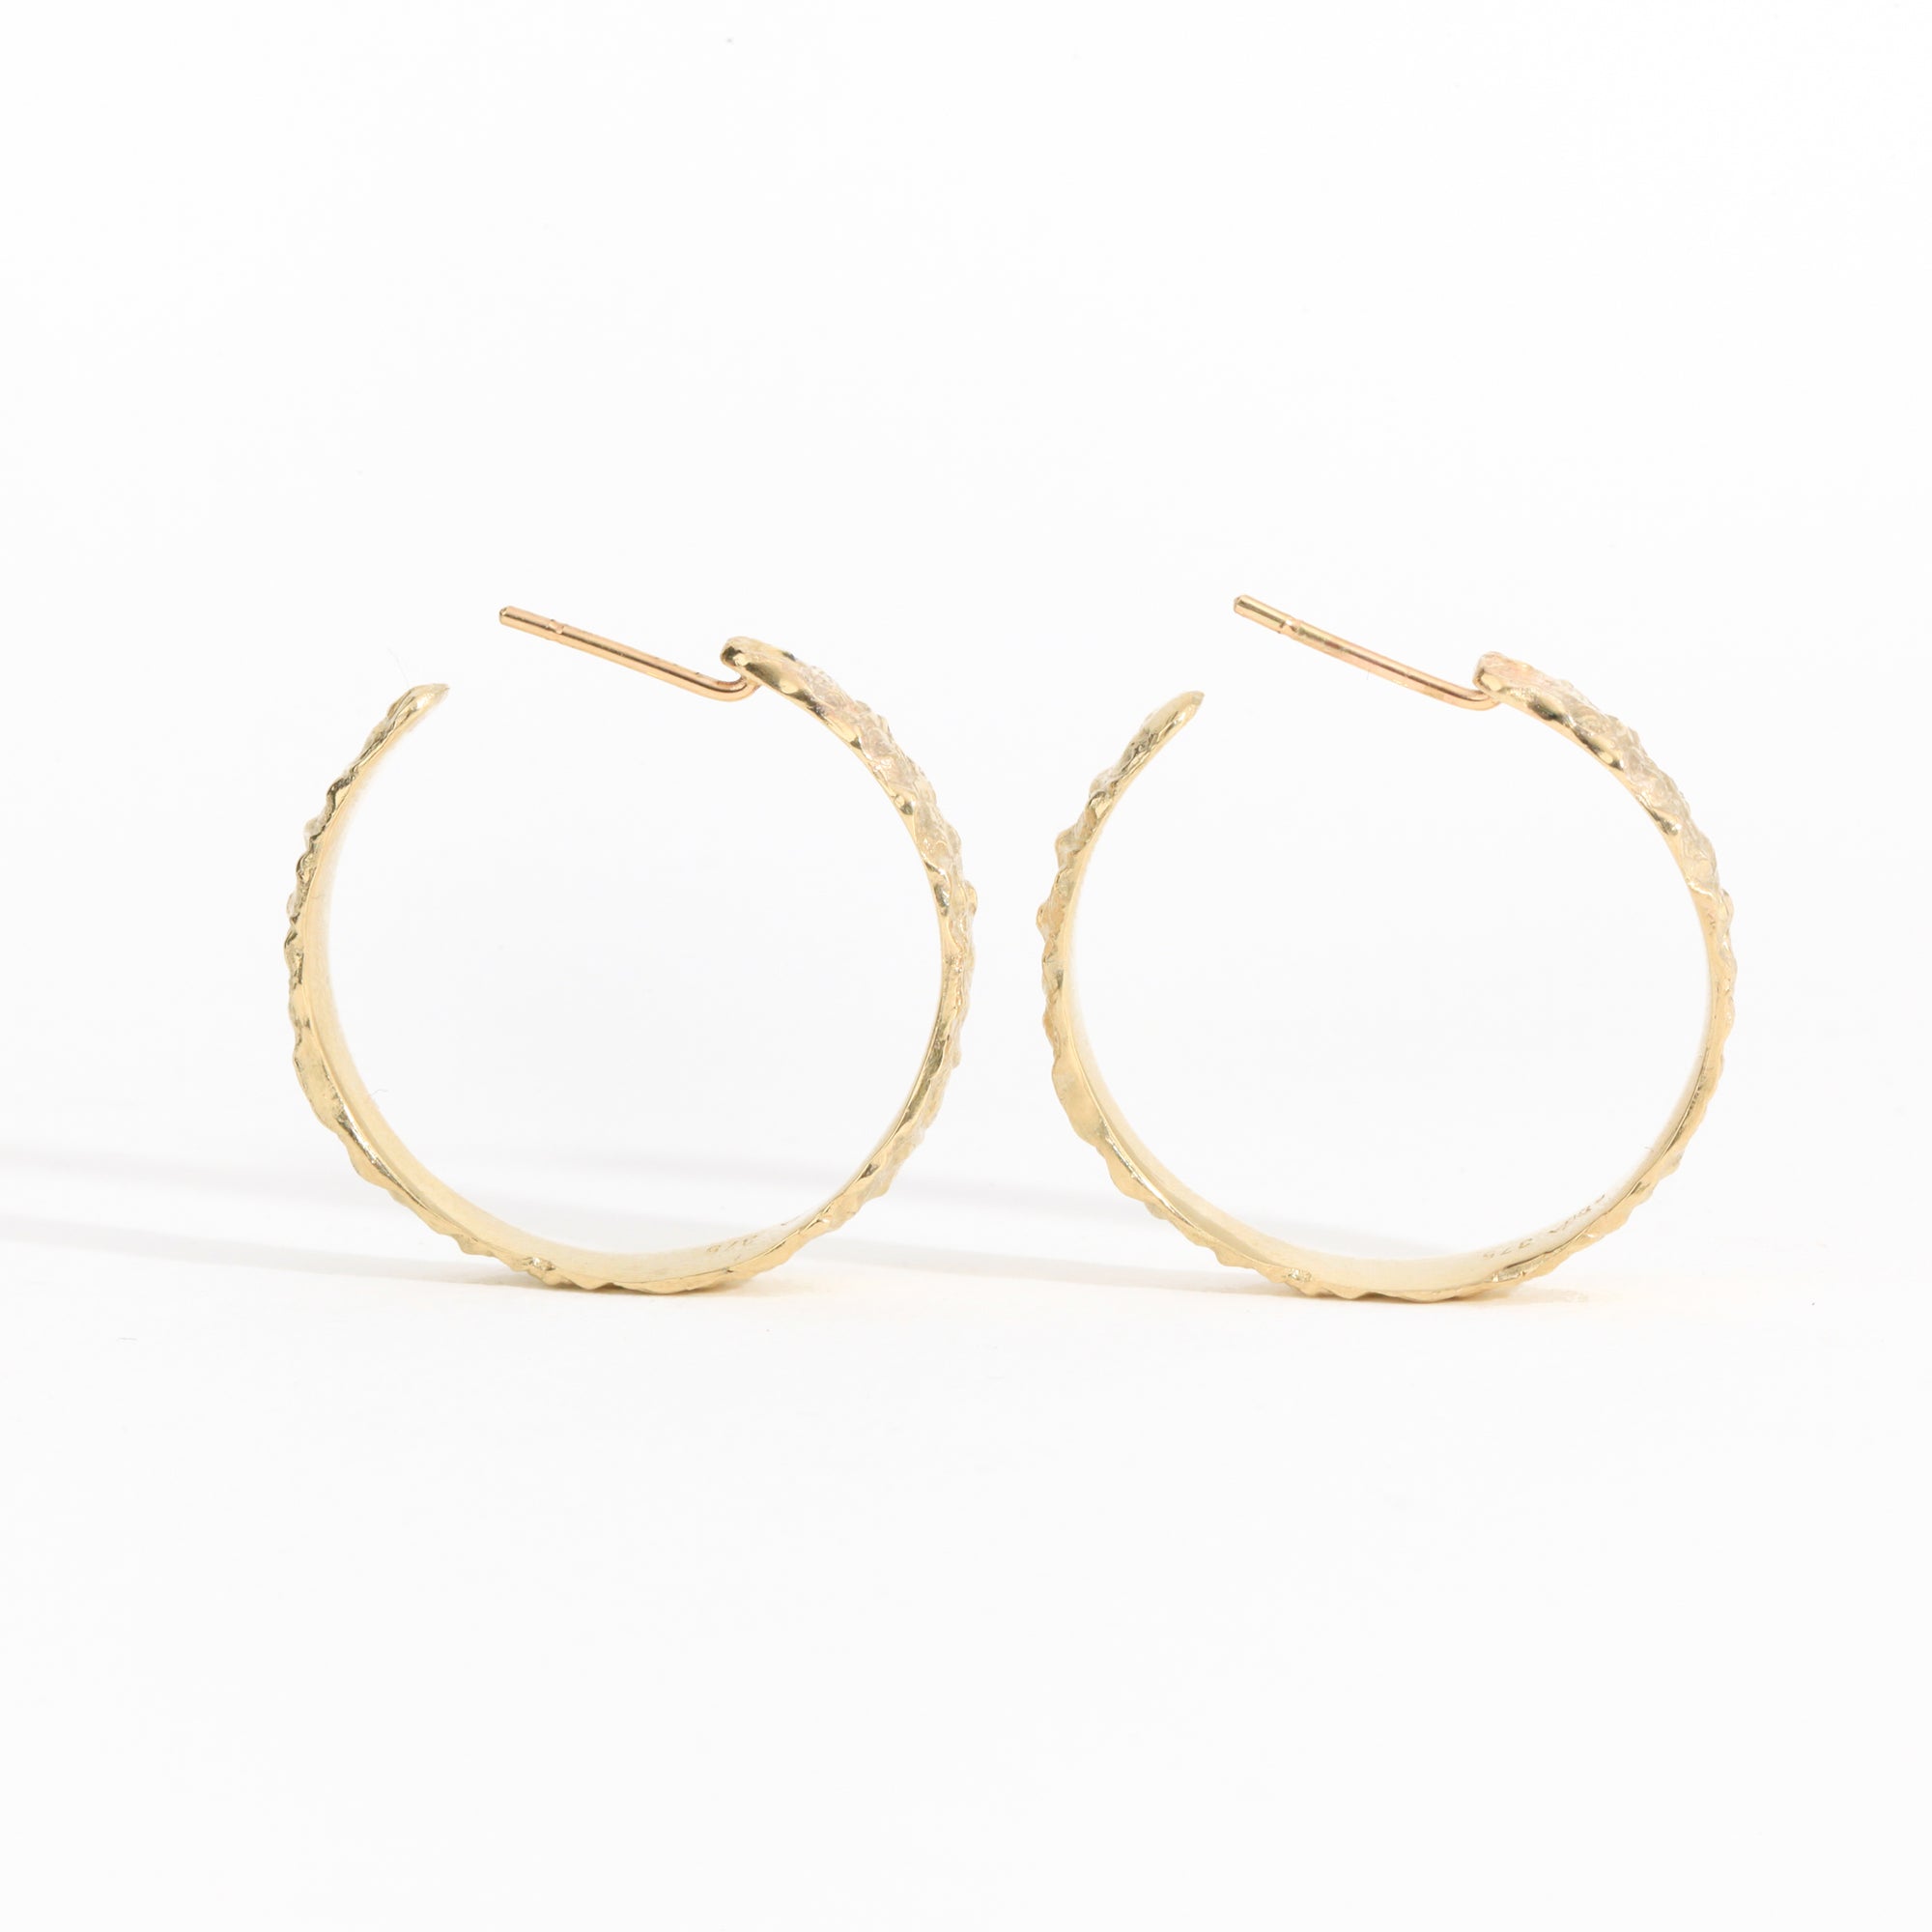 Solid 9ct yellow gold hoop earrings